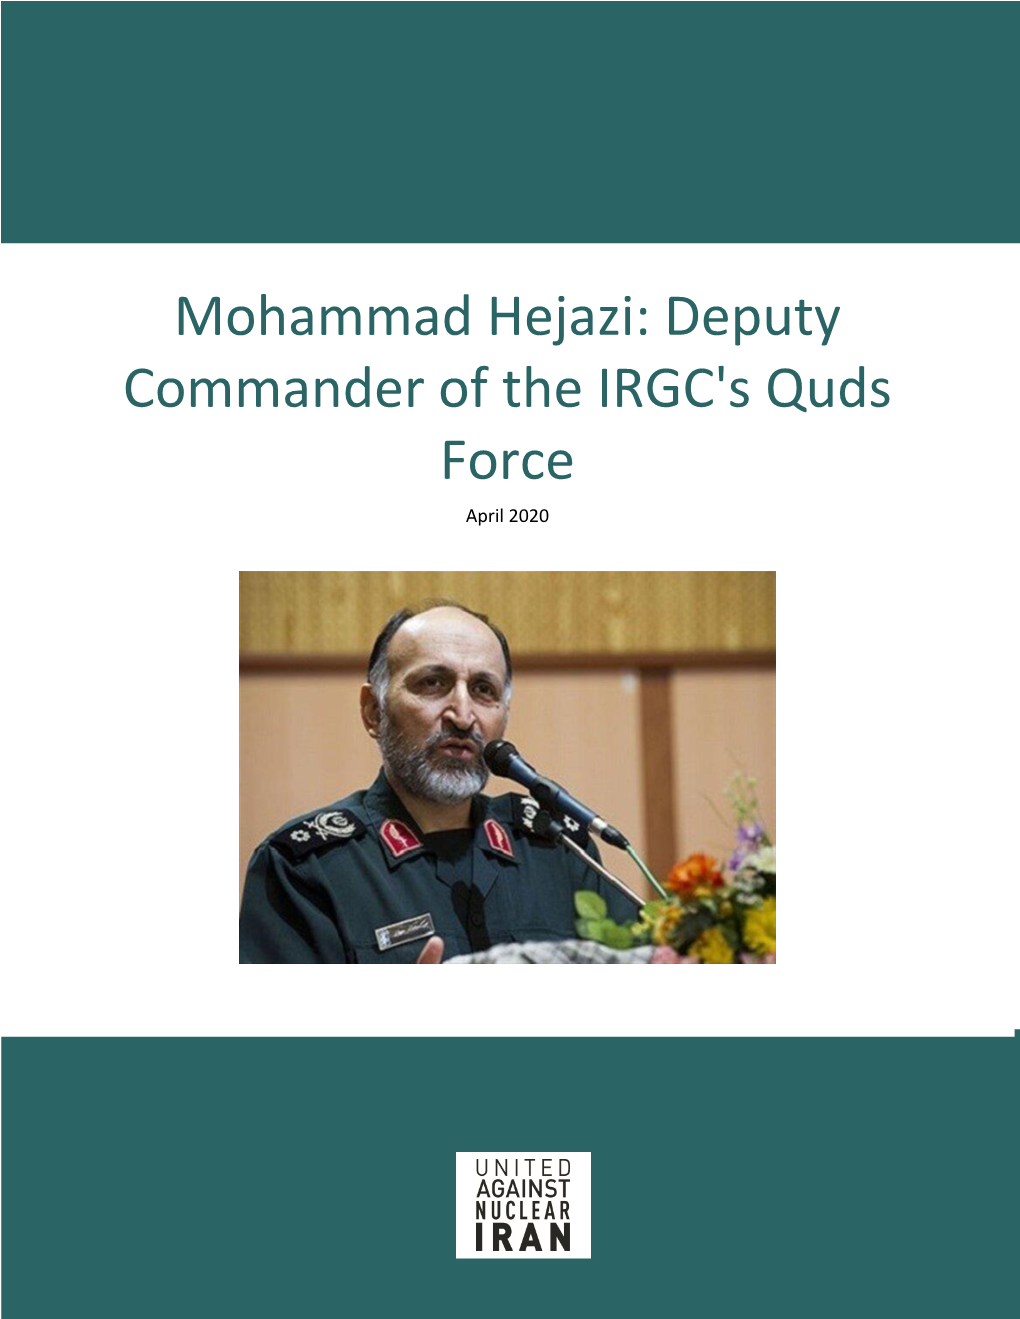 Mohammad Hejazi: Deputy Commander of the IRGC's Quds Force April 2020 Following the Death of Qassem Soleimani in a U.S